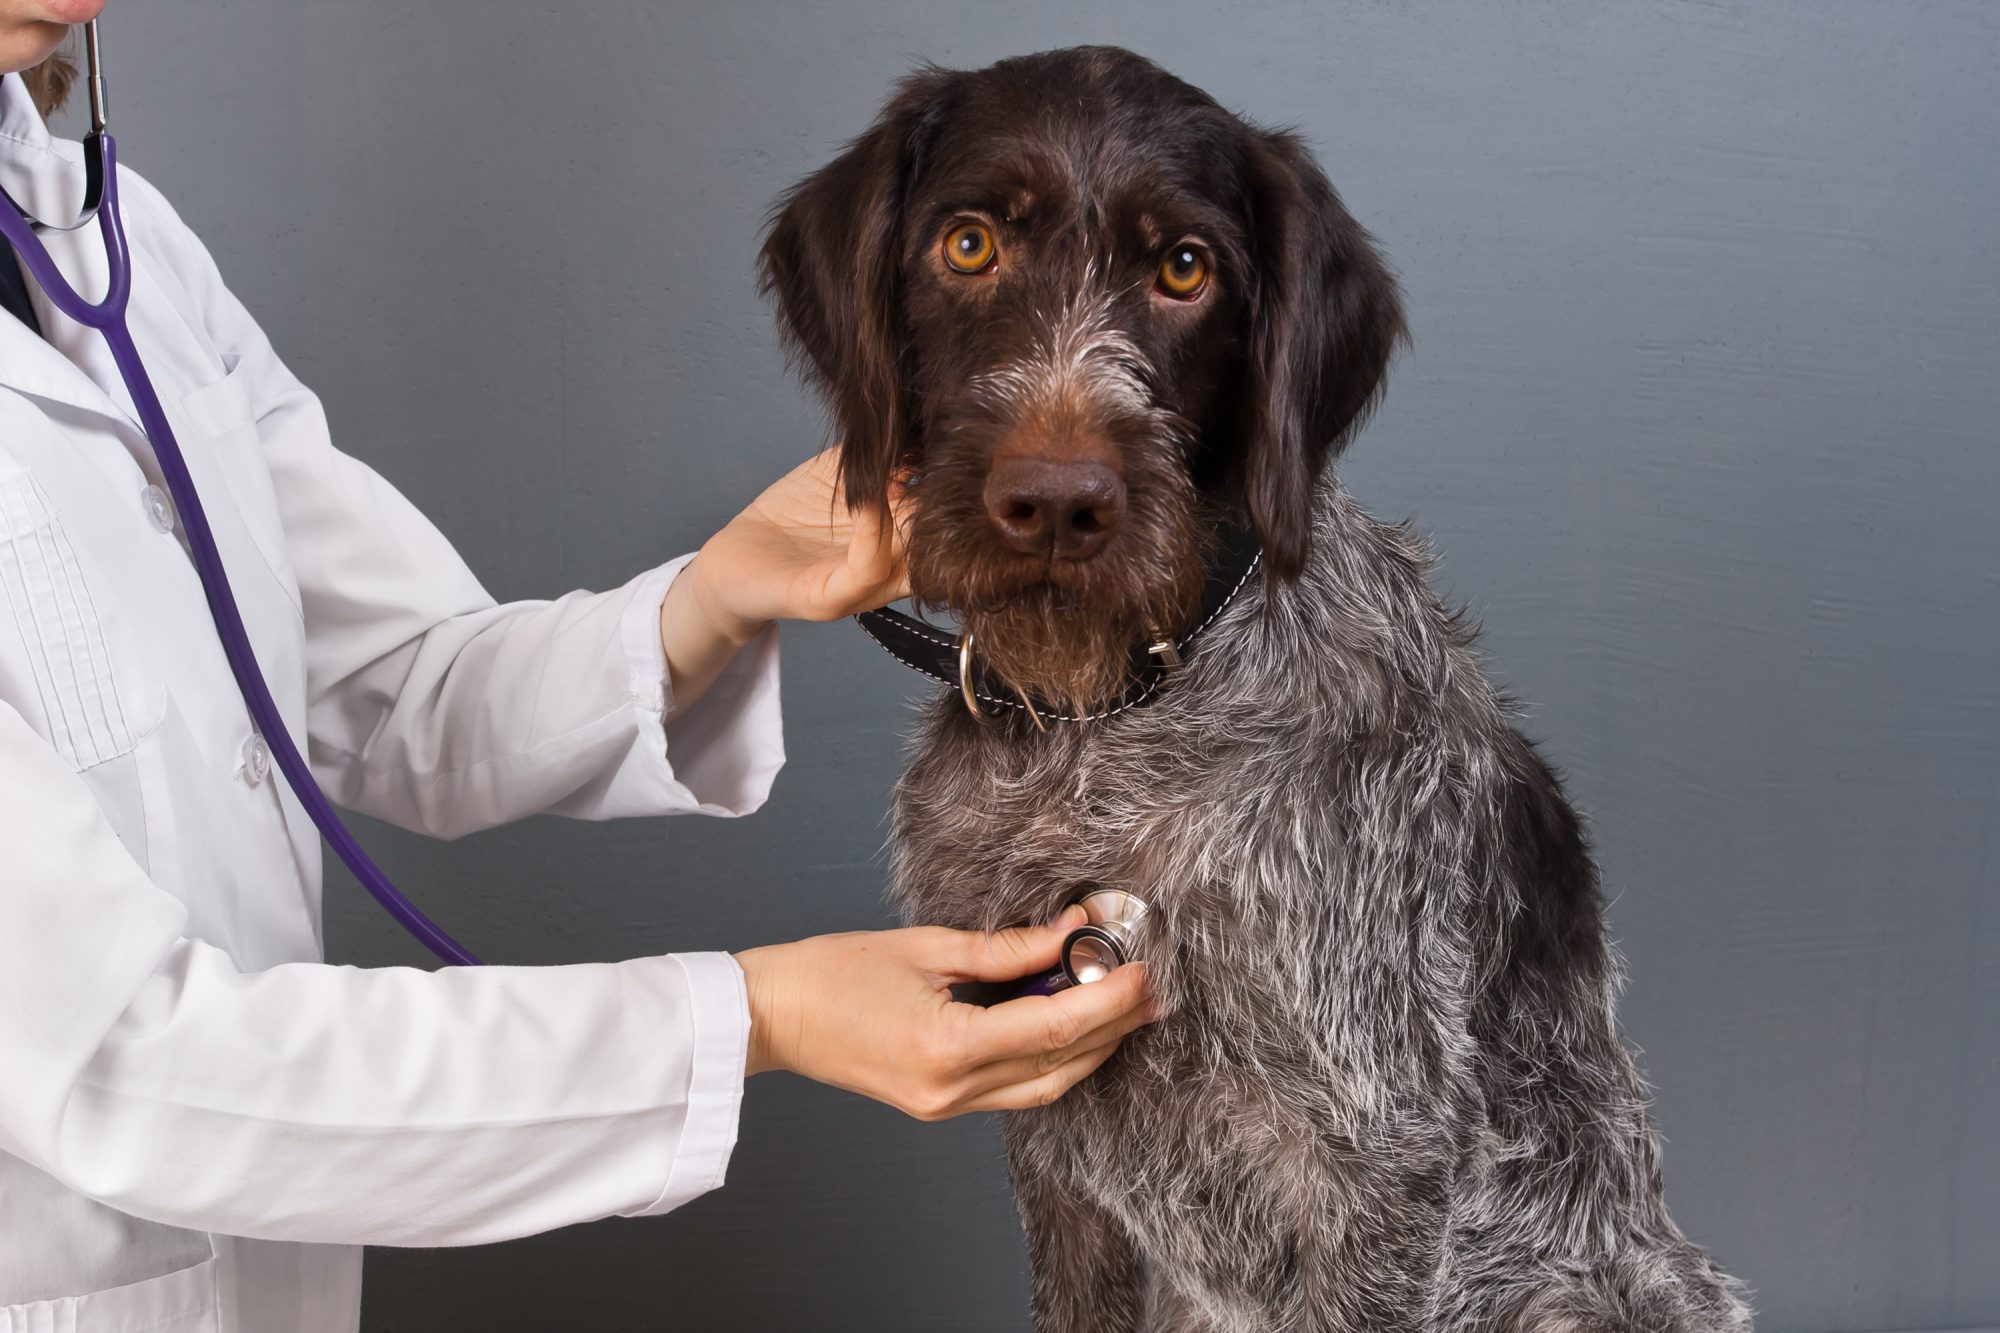 Make vet visits less stressful!